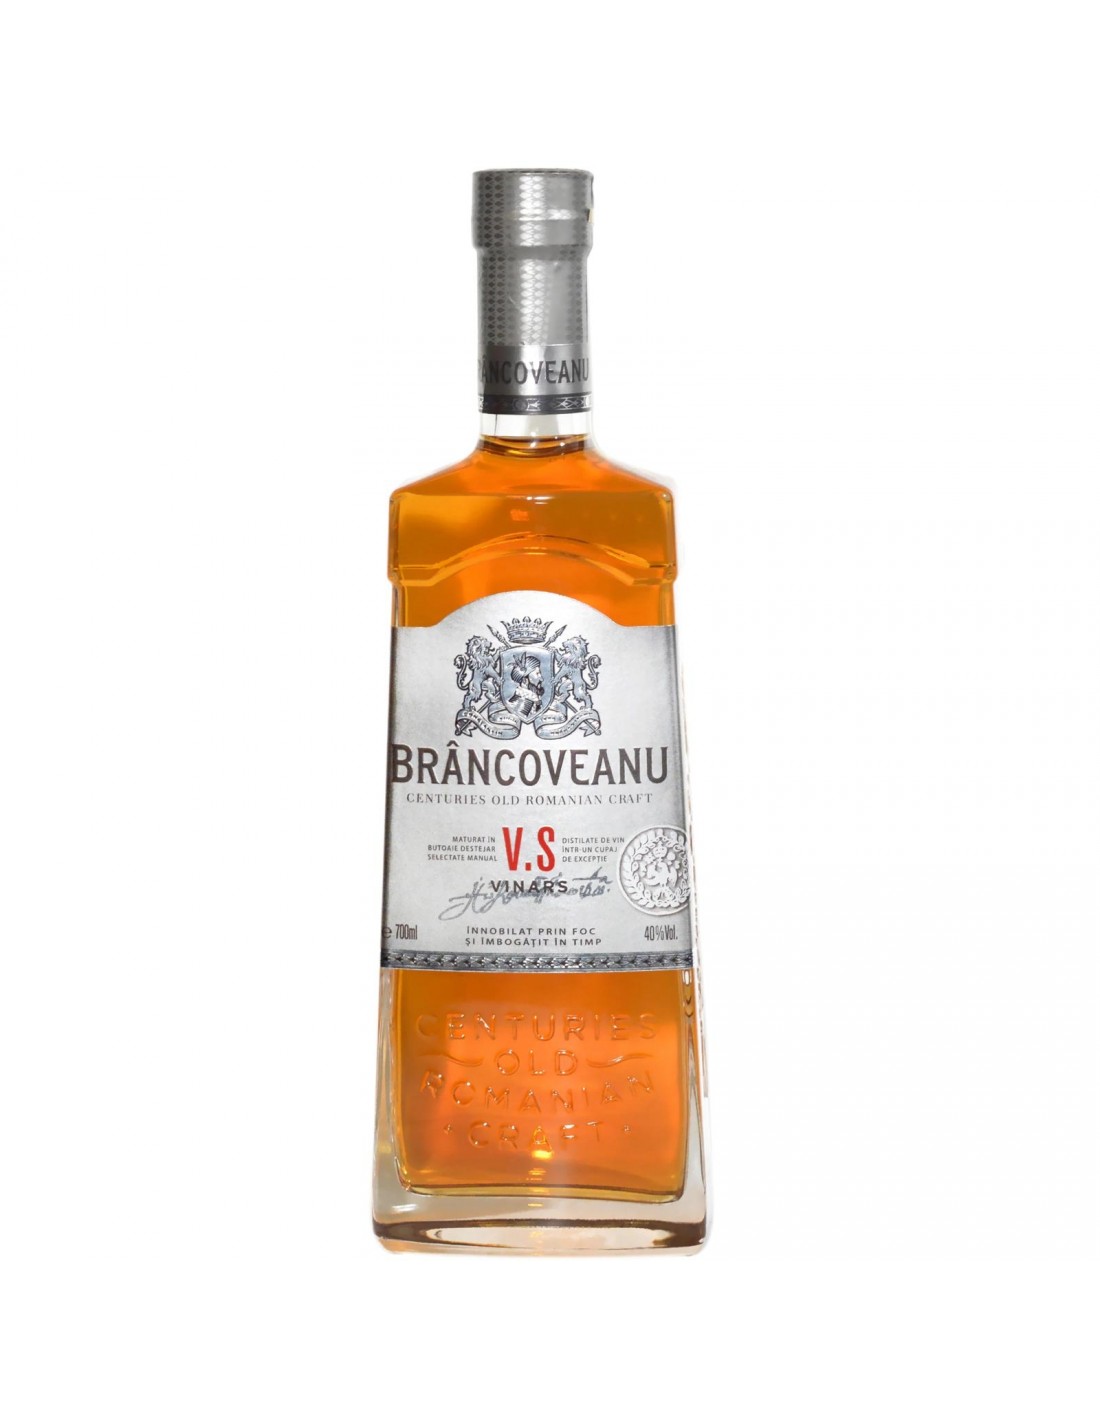 Vinars Brancoveanu VS, 40% alc., 0.7L, Romania alcooldiscount.ro